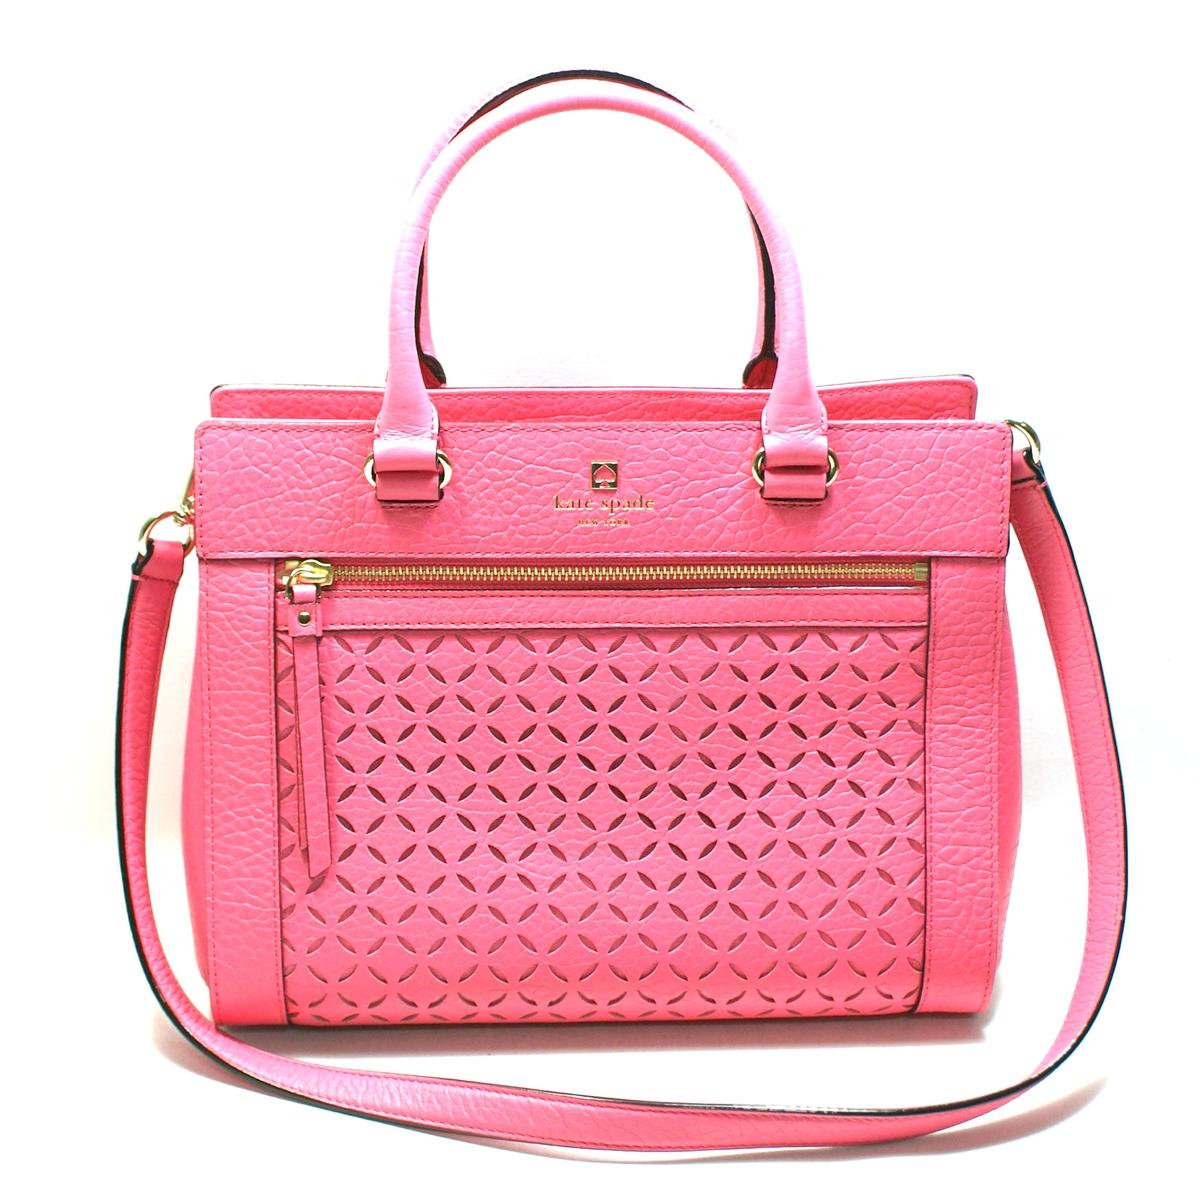 Purse Satchel Handbag Pink | SEMA Data Co-op